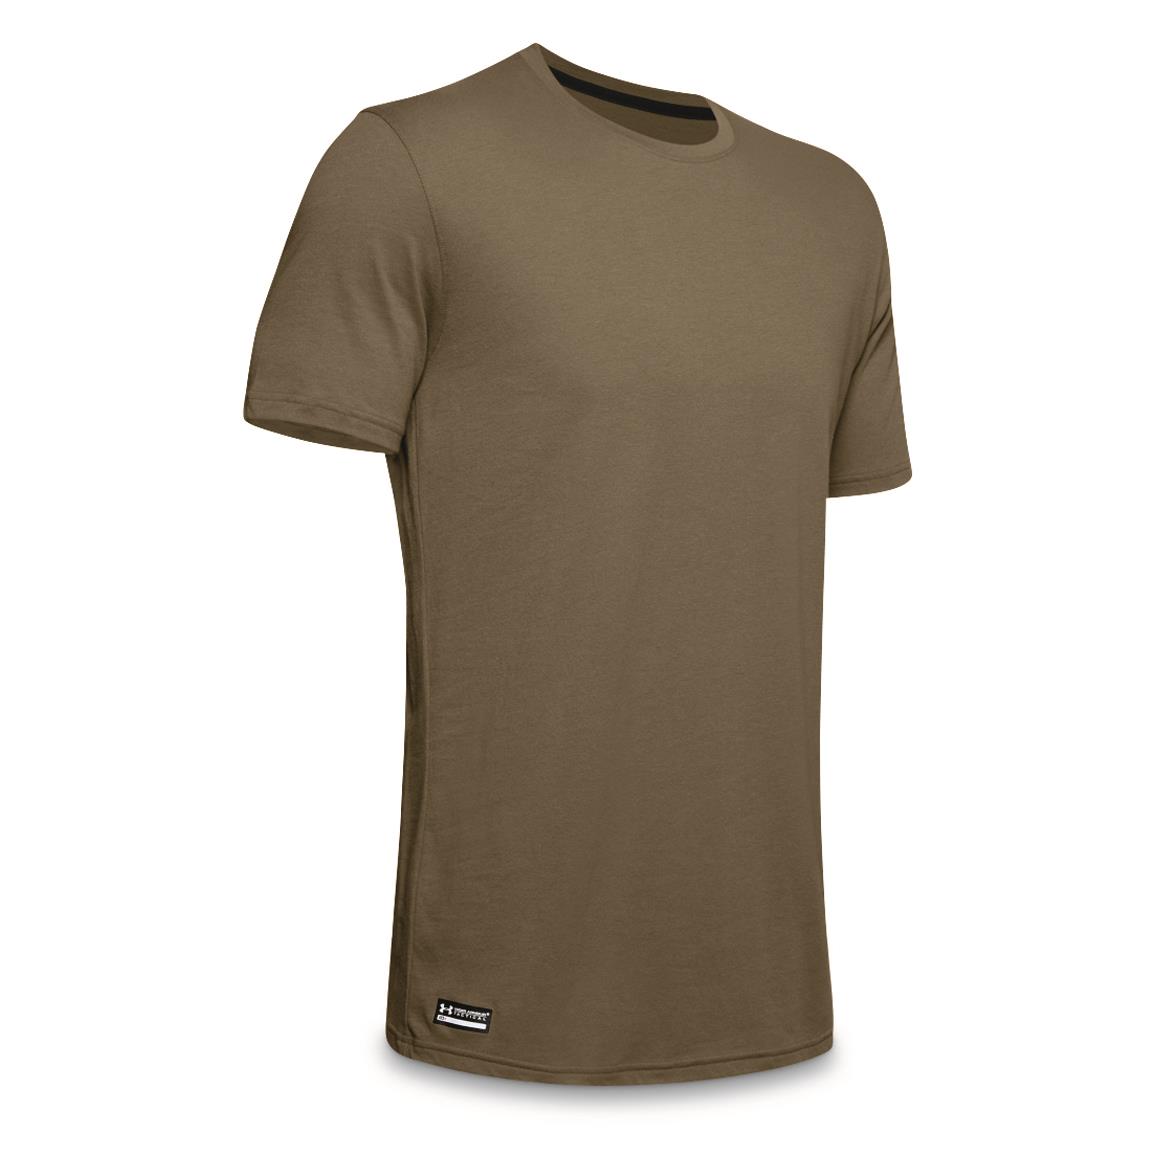 Under Armour Men's UA Tactical T-Shirt, Federal Tan/federal Tan